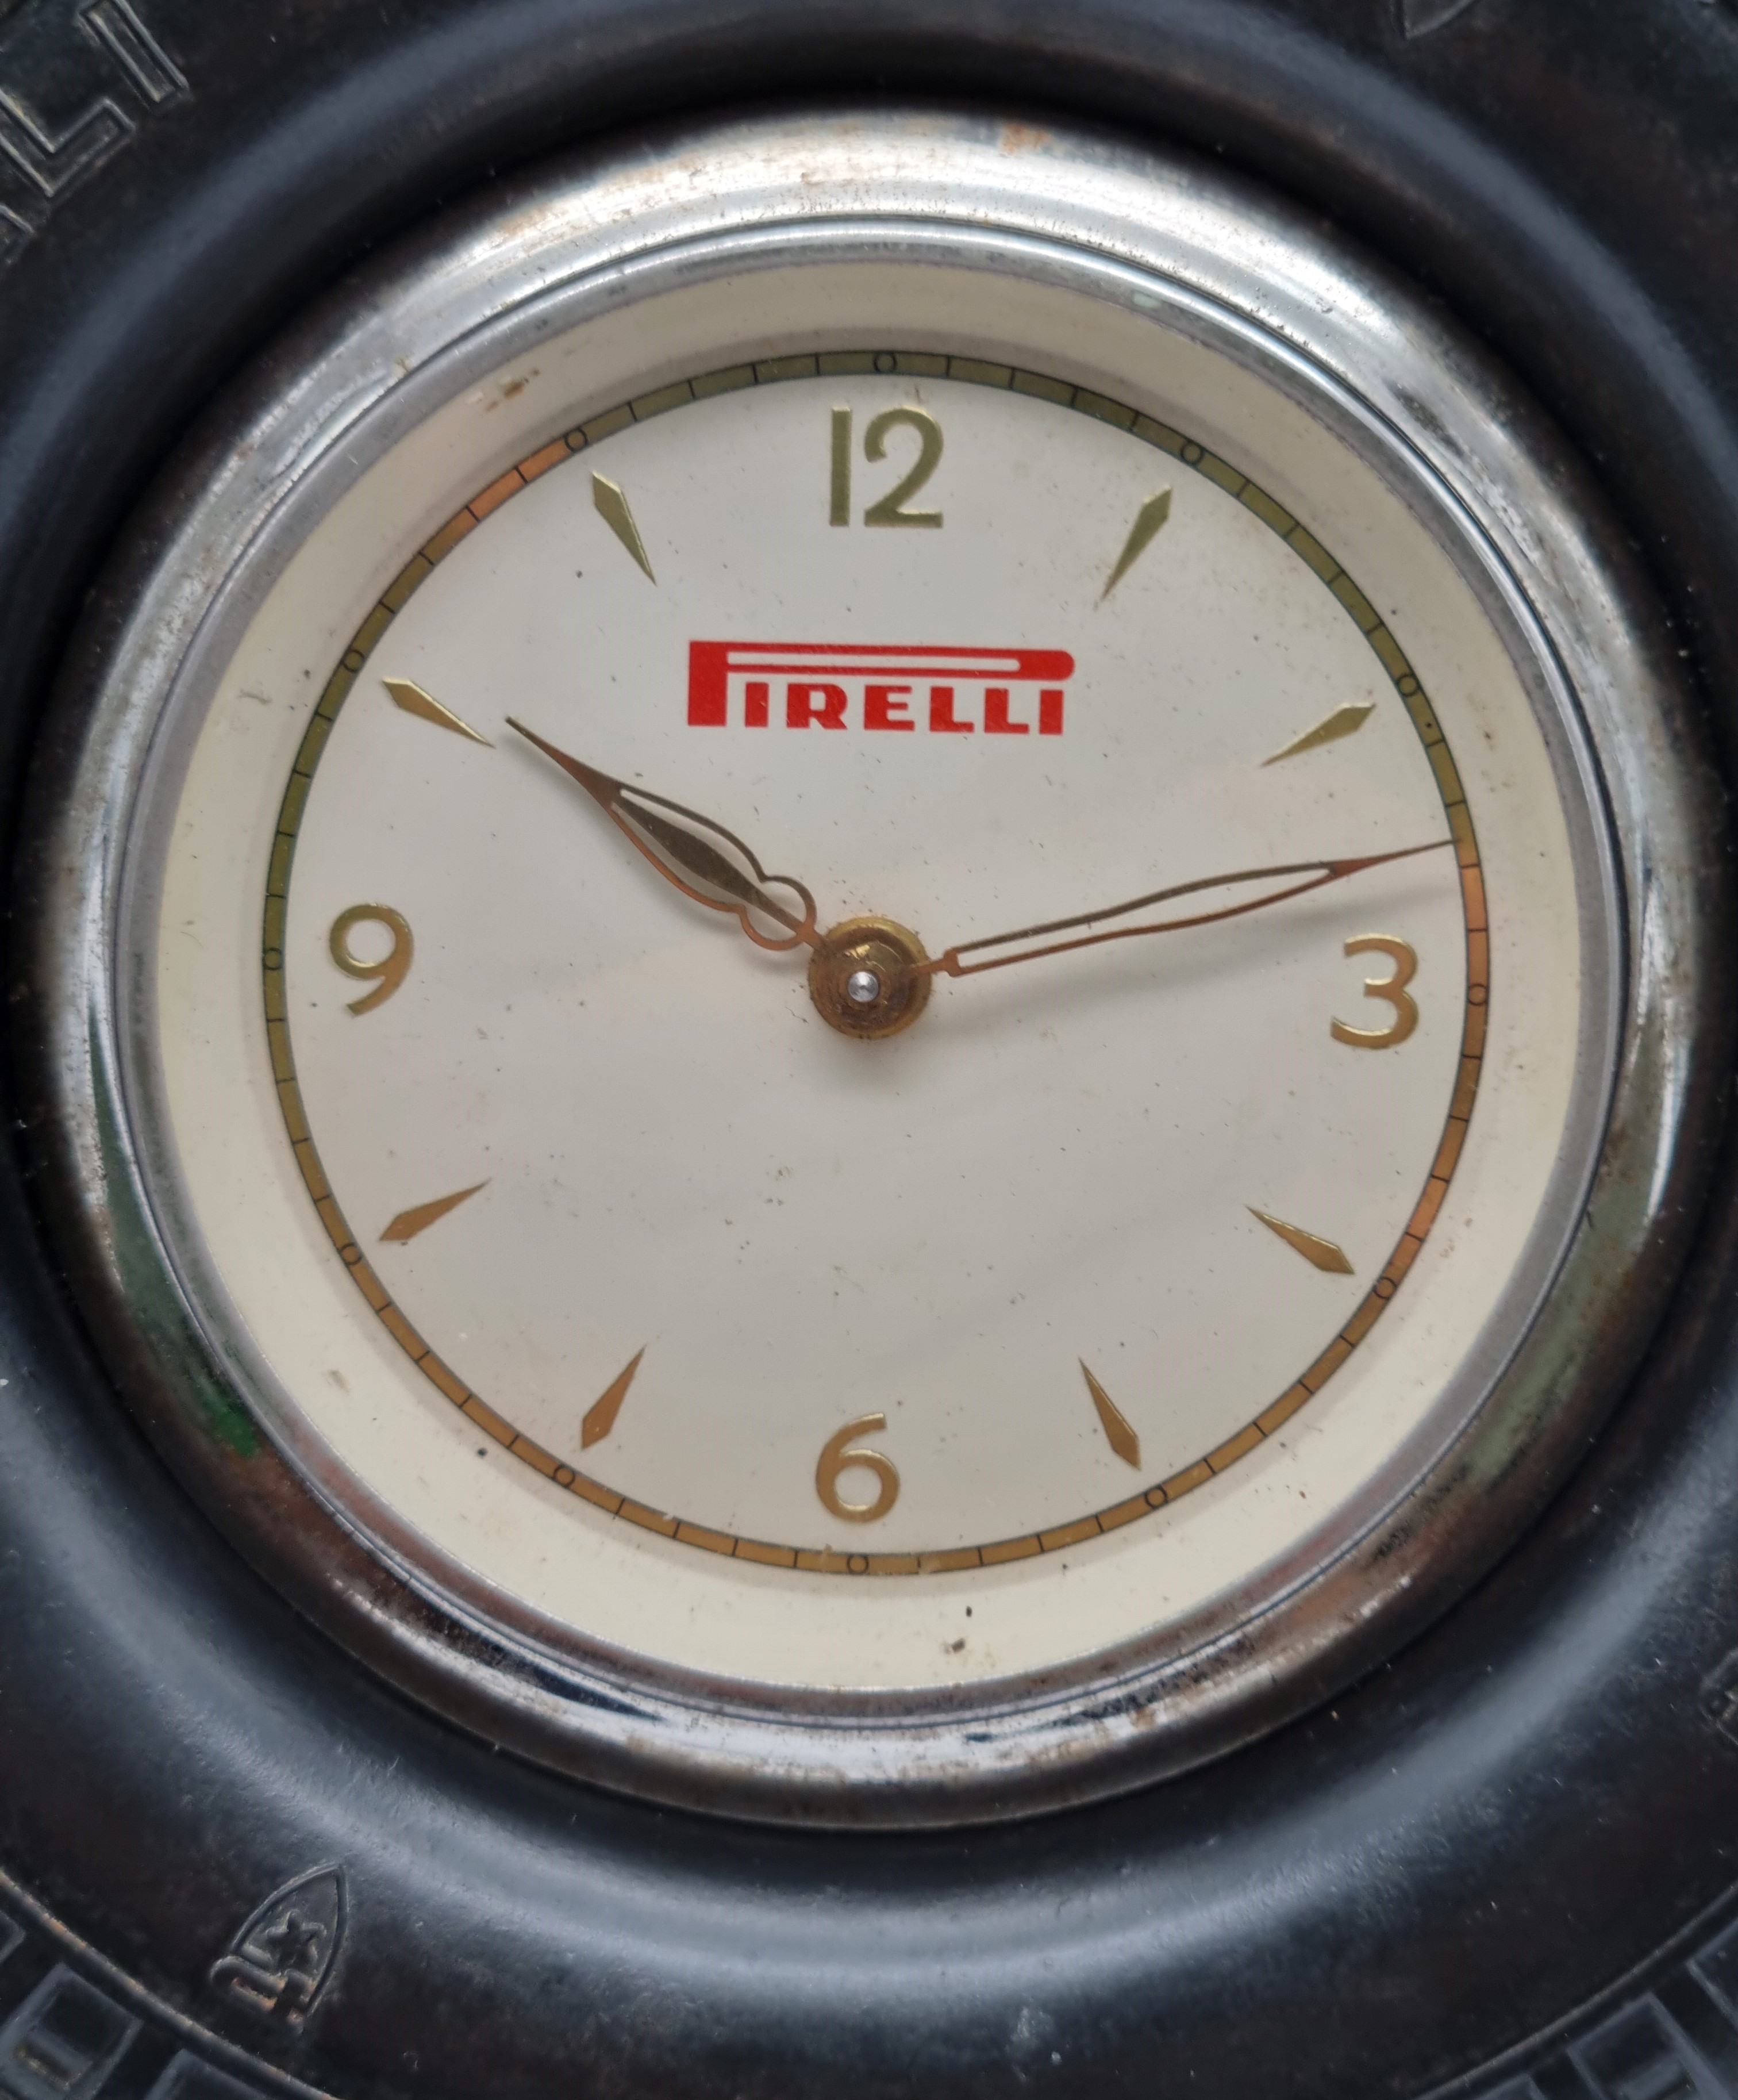 Anonimo Pirelli Italian Belted Advertising Clock from Pirelli - Rolle - 1950s Good Condition | San Giorgio a Cremano